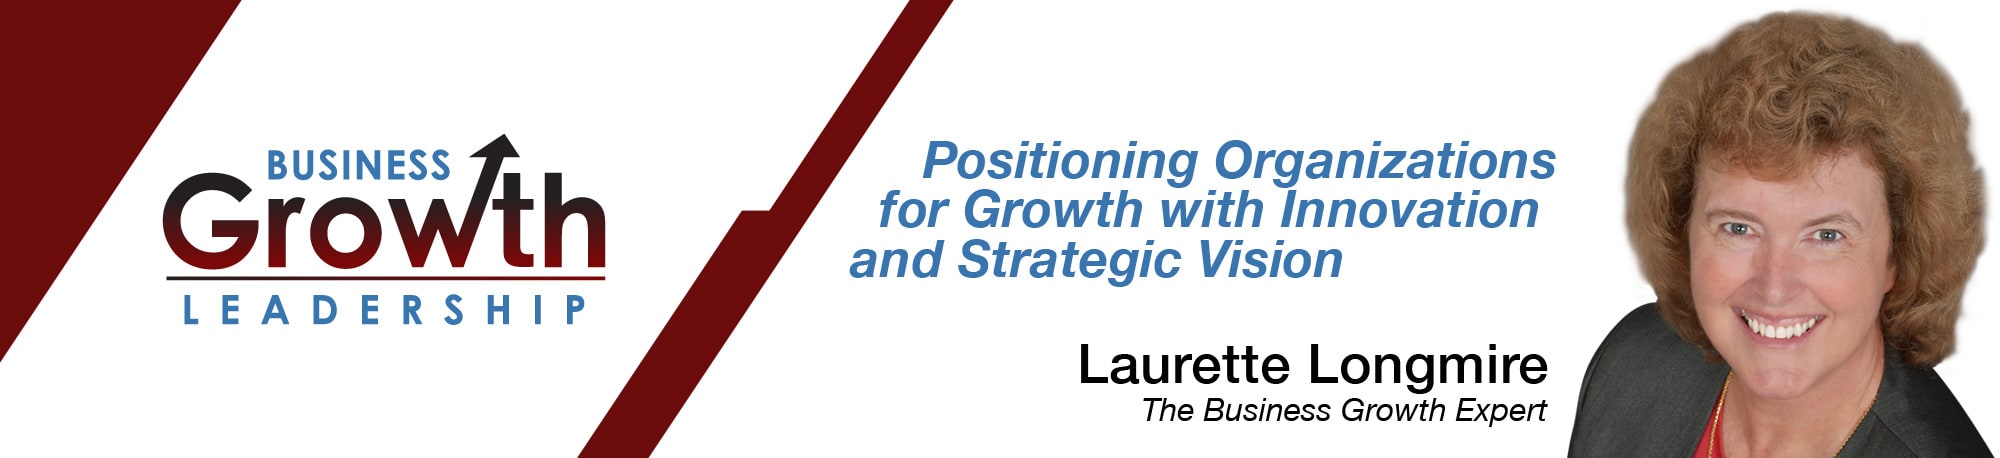 Business Growth Leadership